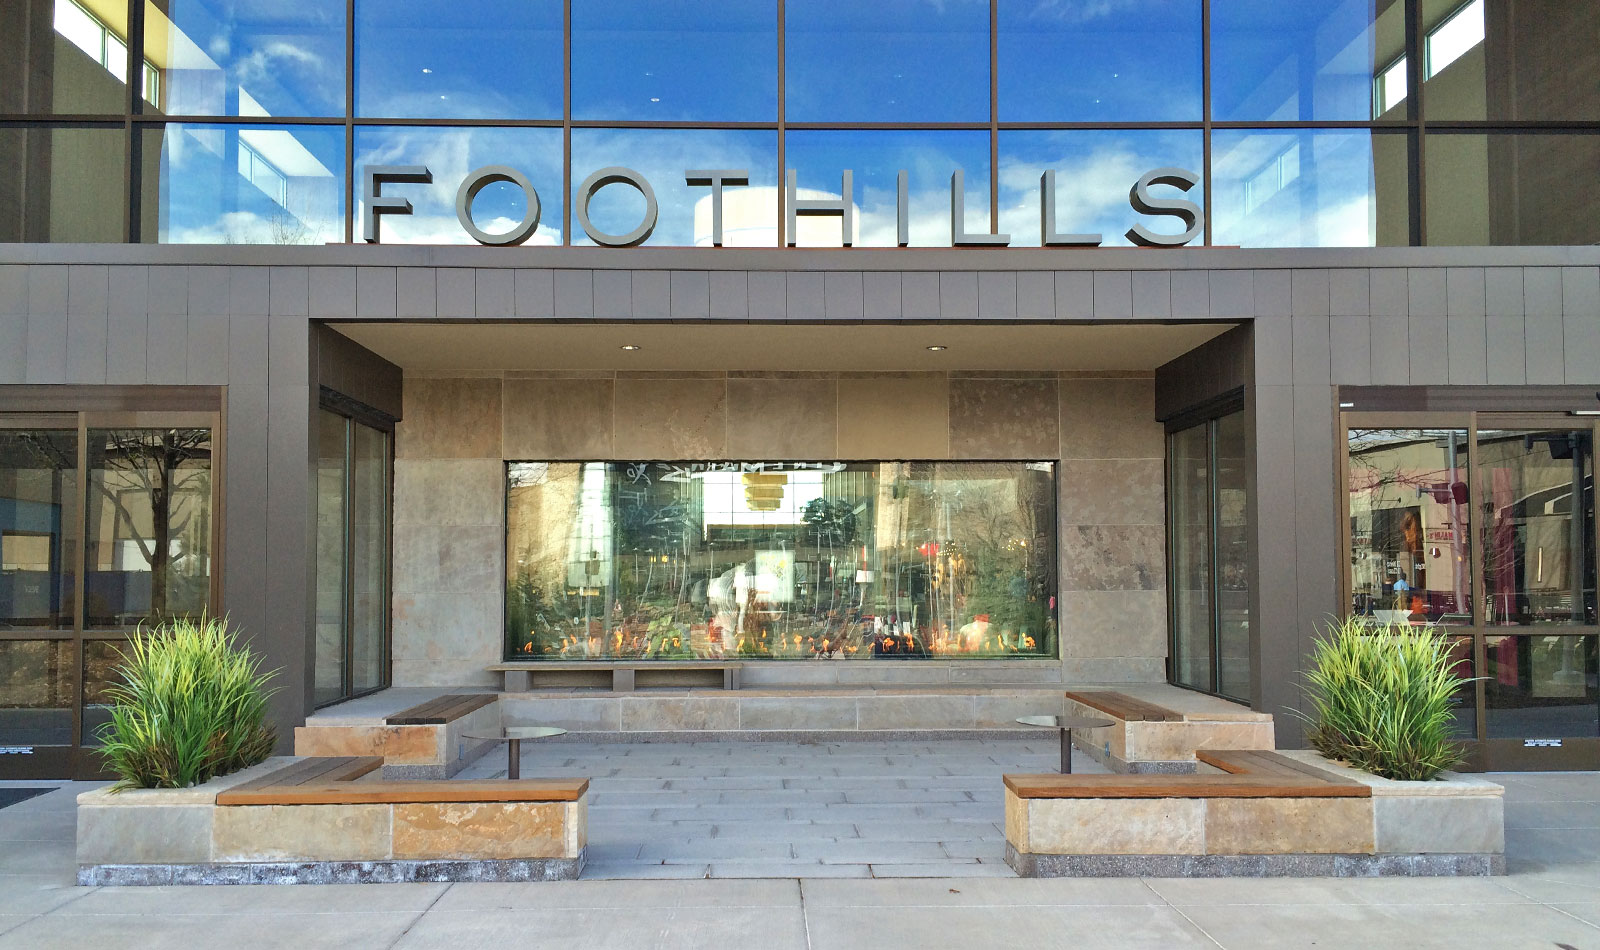 Foothills - 505Design